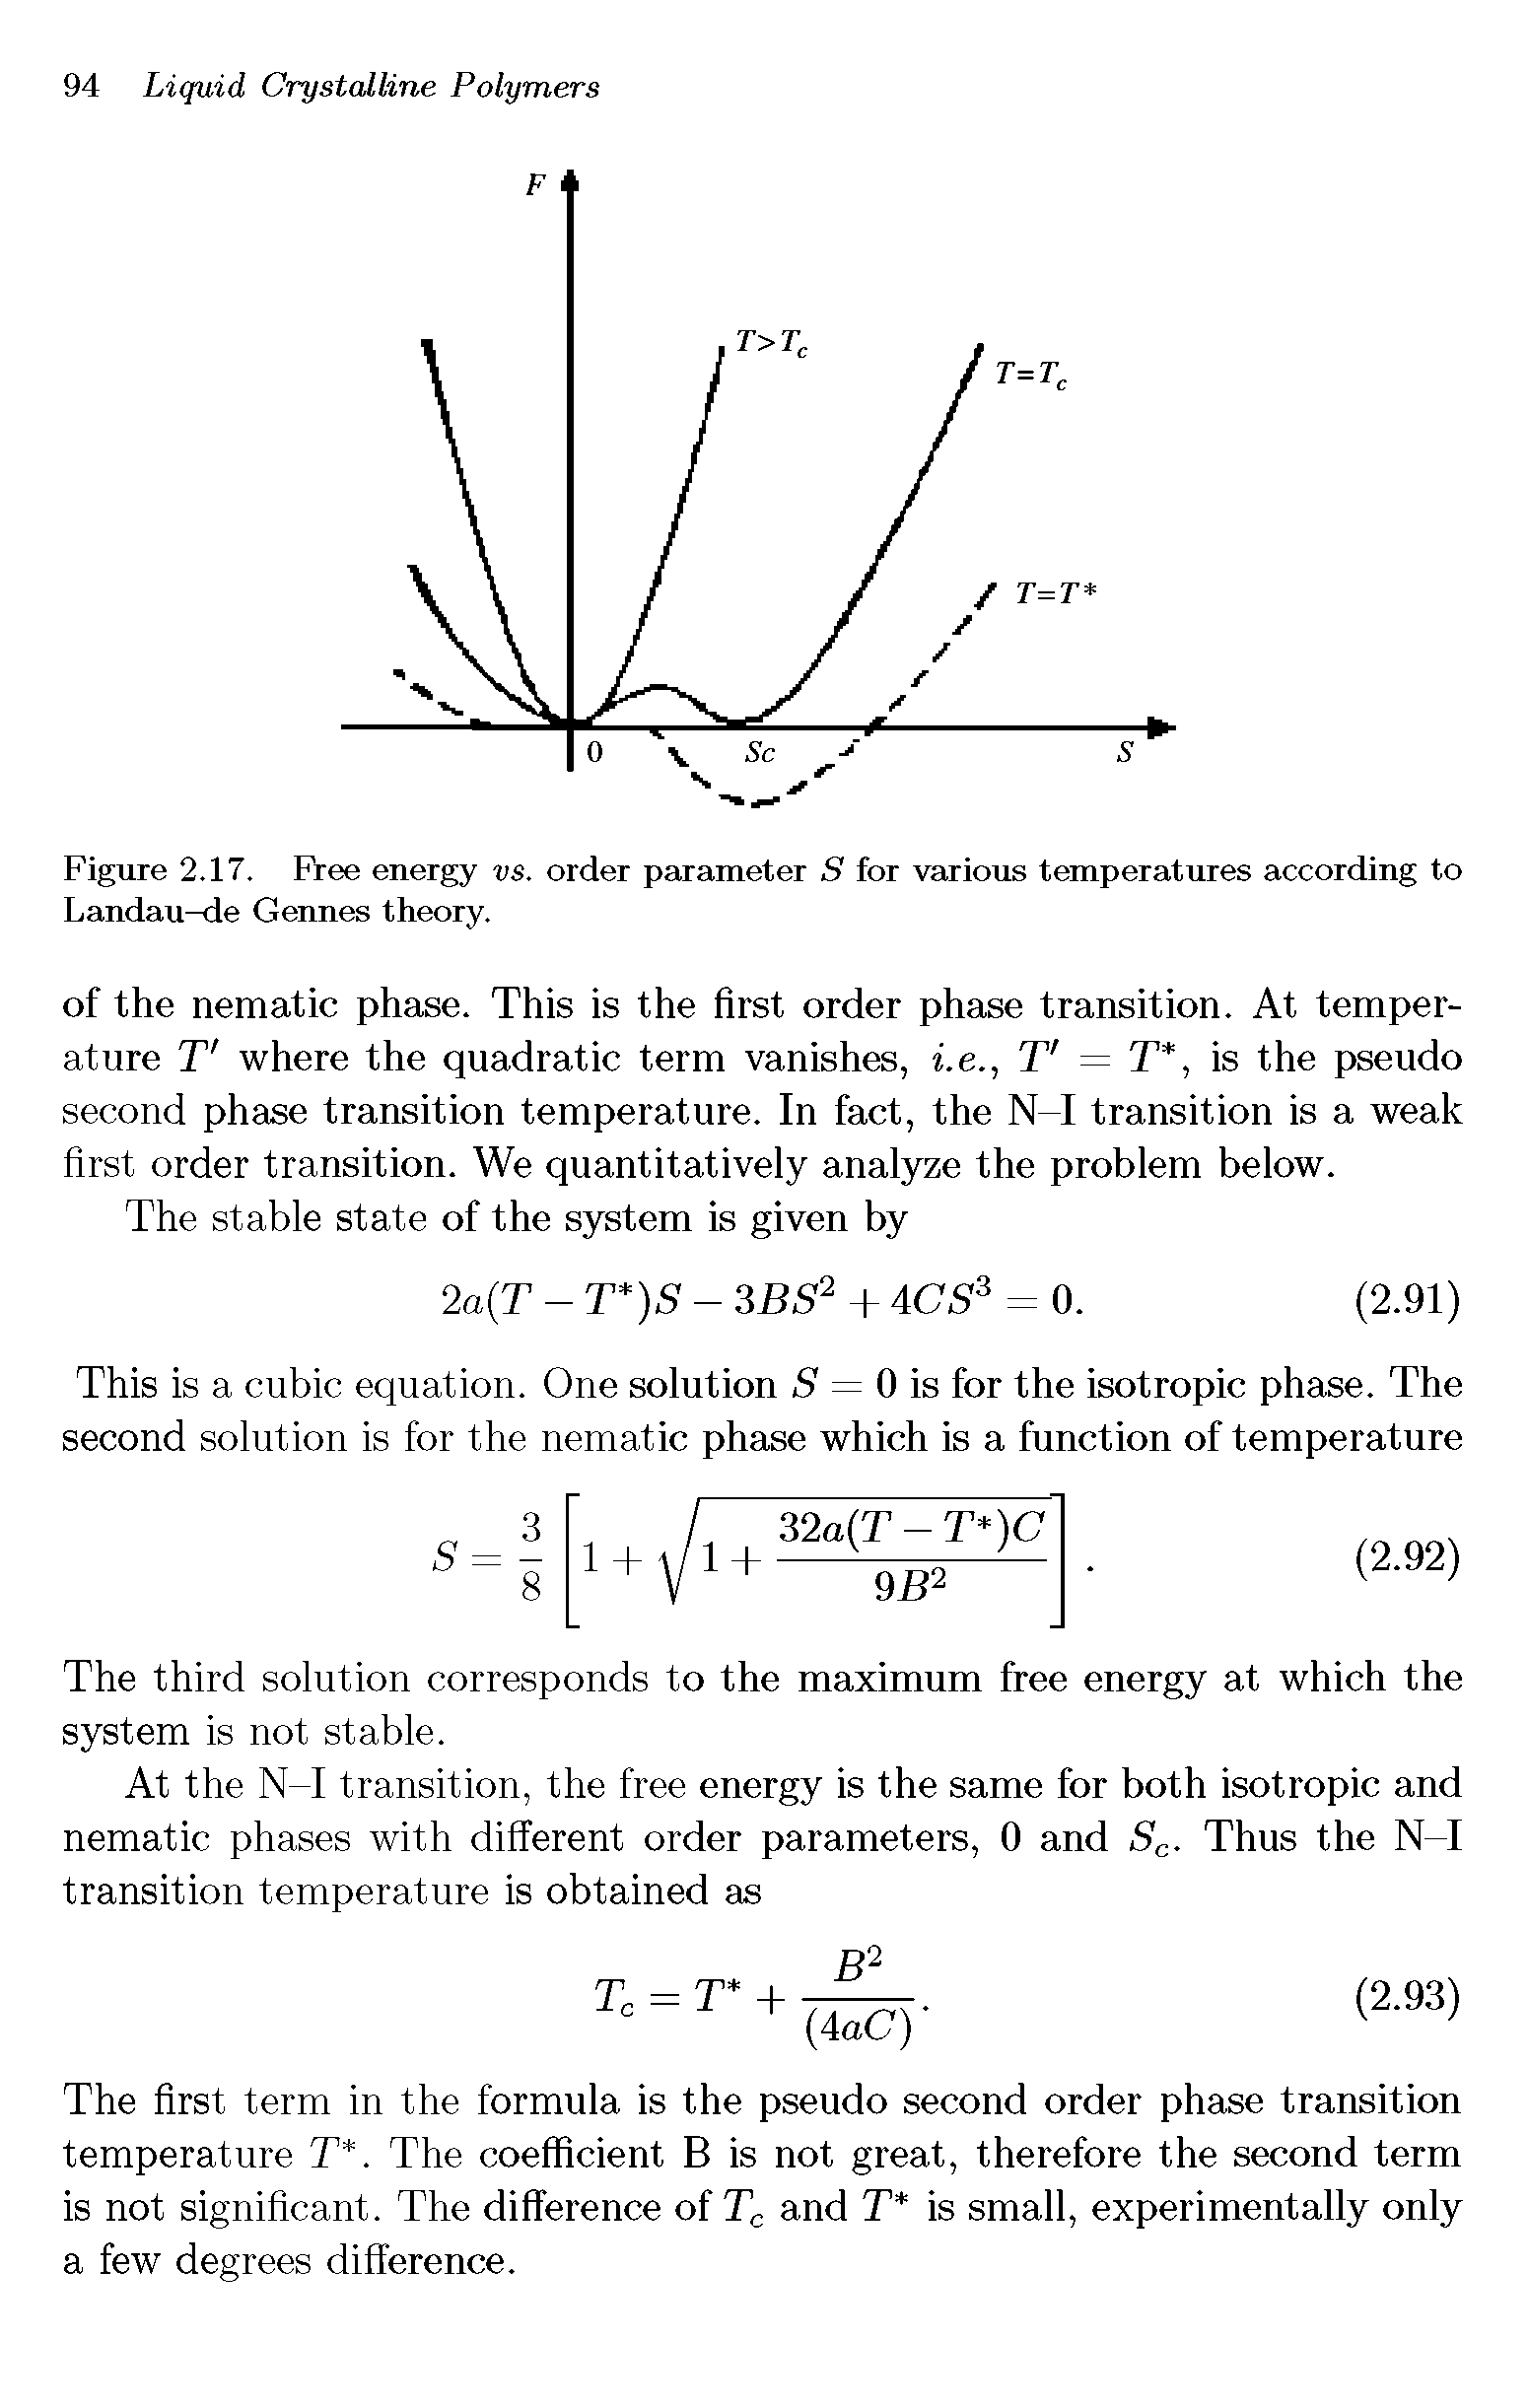 Figure 2.17. Free energy vs. order parameter S for various temperatures according to Landau-de Gennes theory.